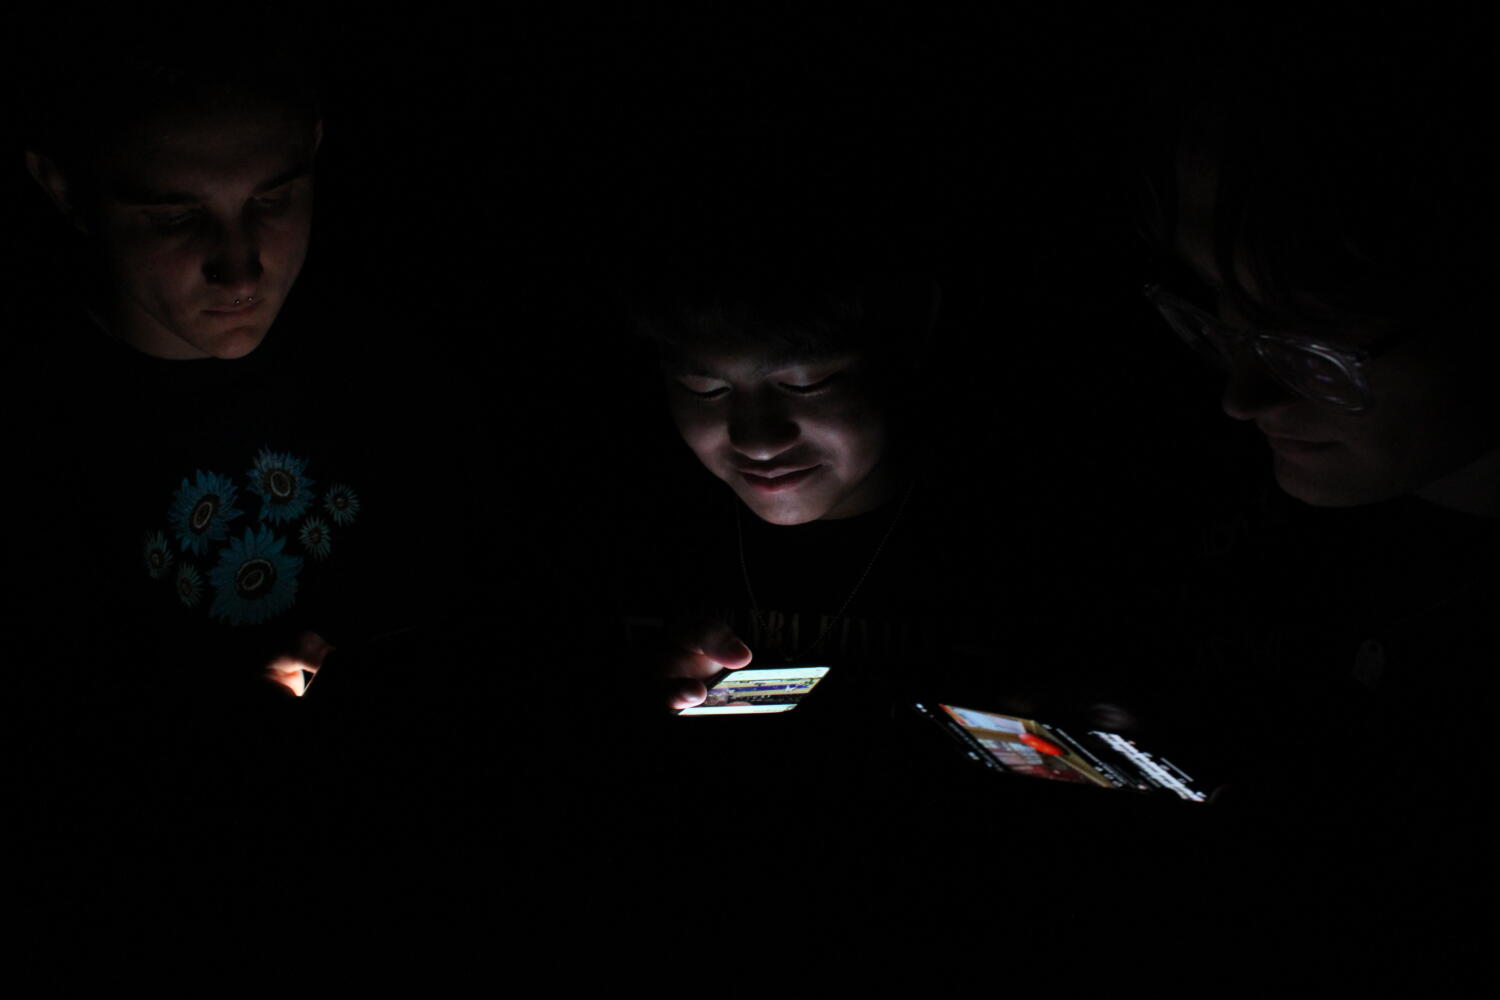 People look down on illuminated phones in a dark room